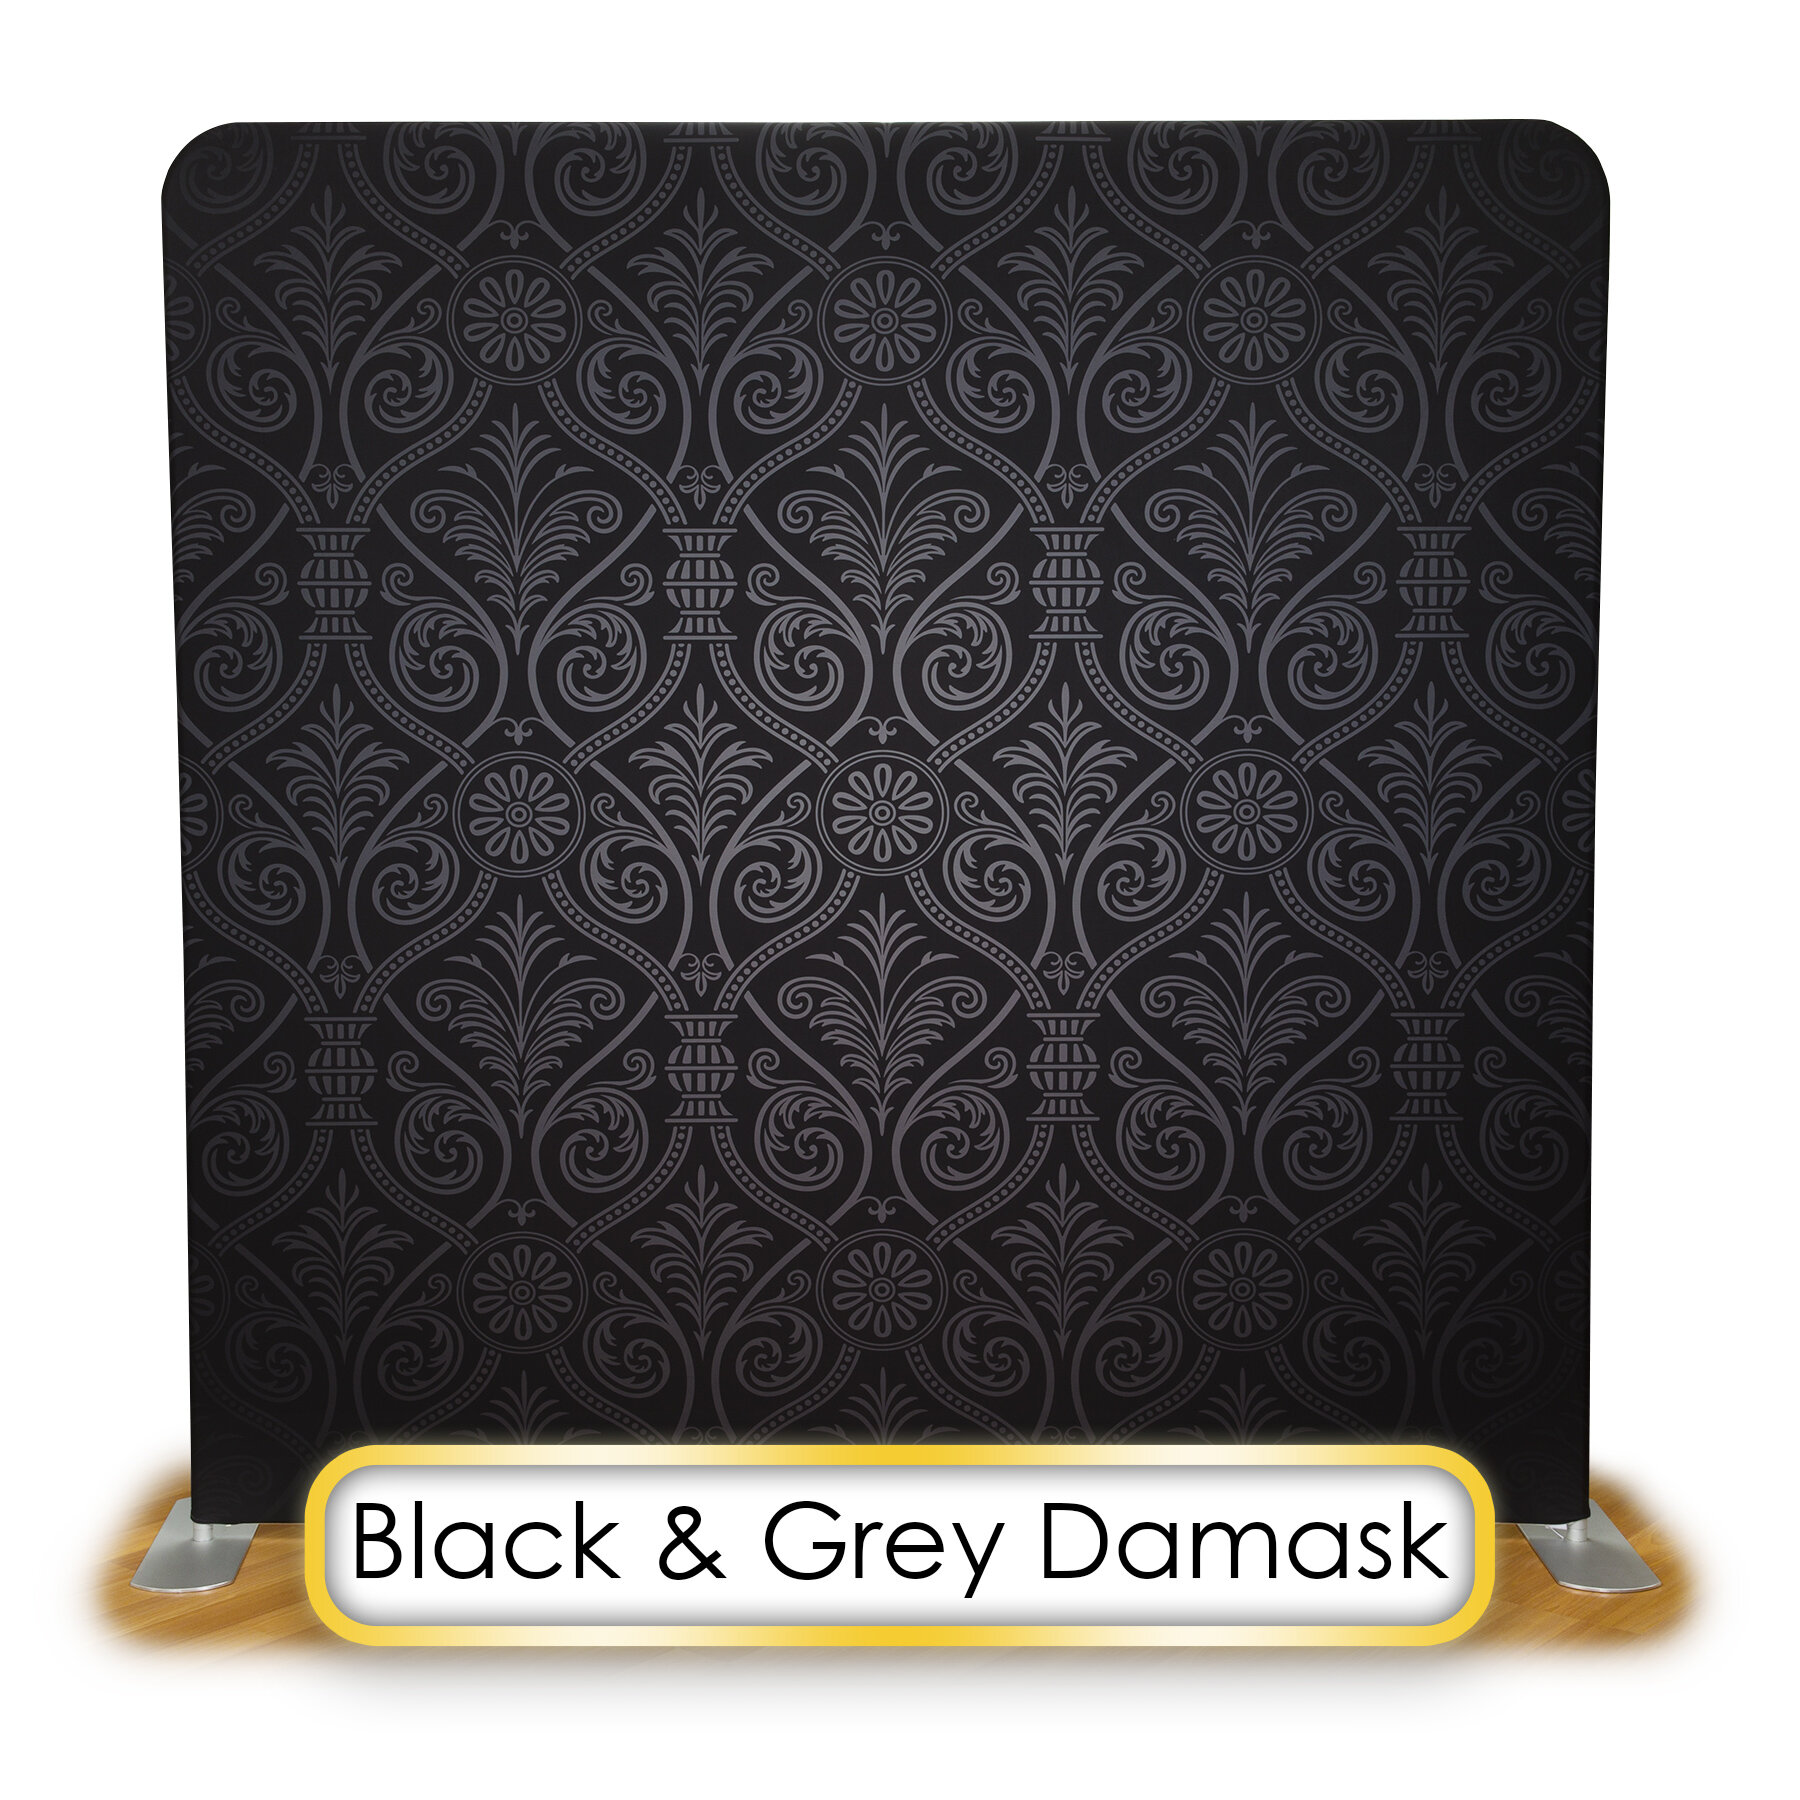 Black & Grey Damask.jpg